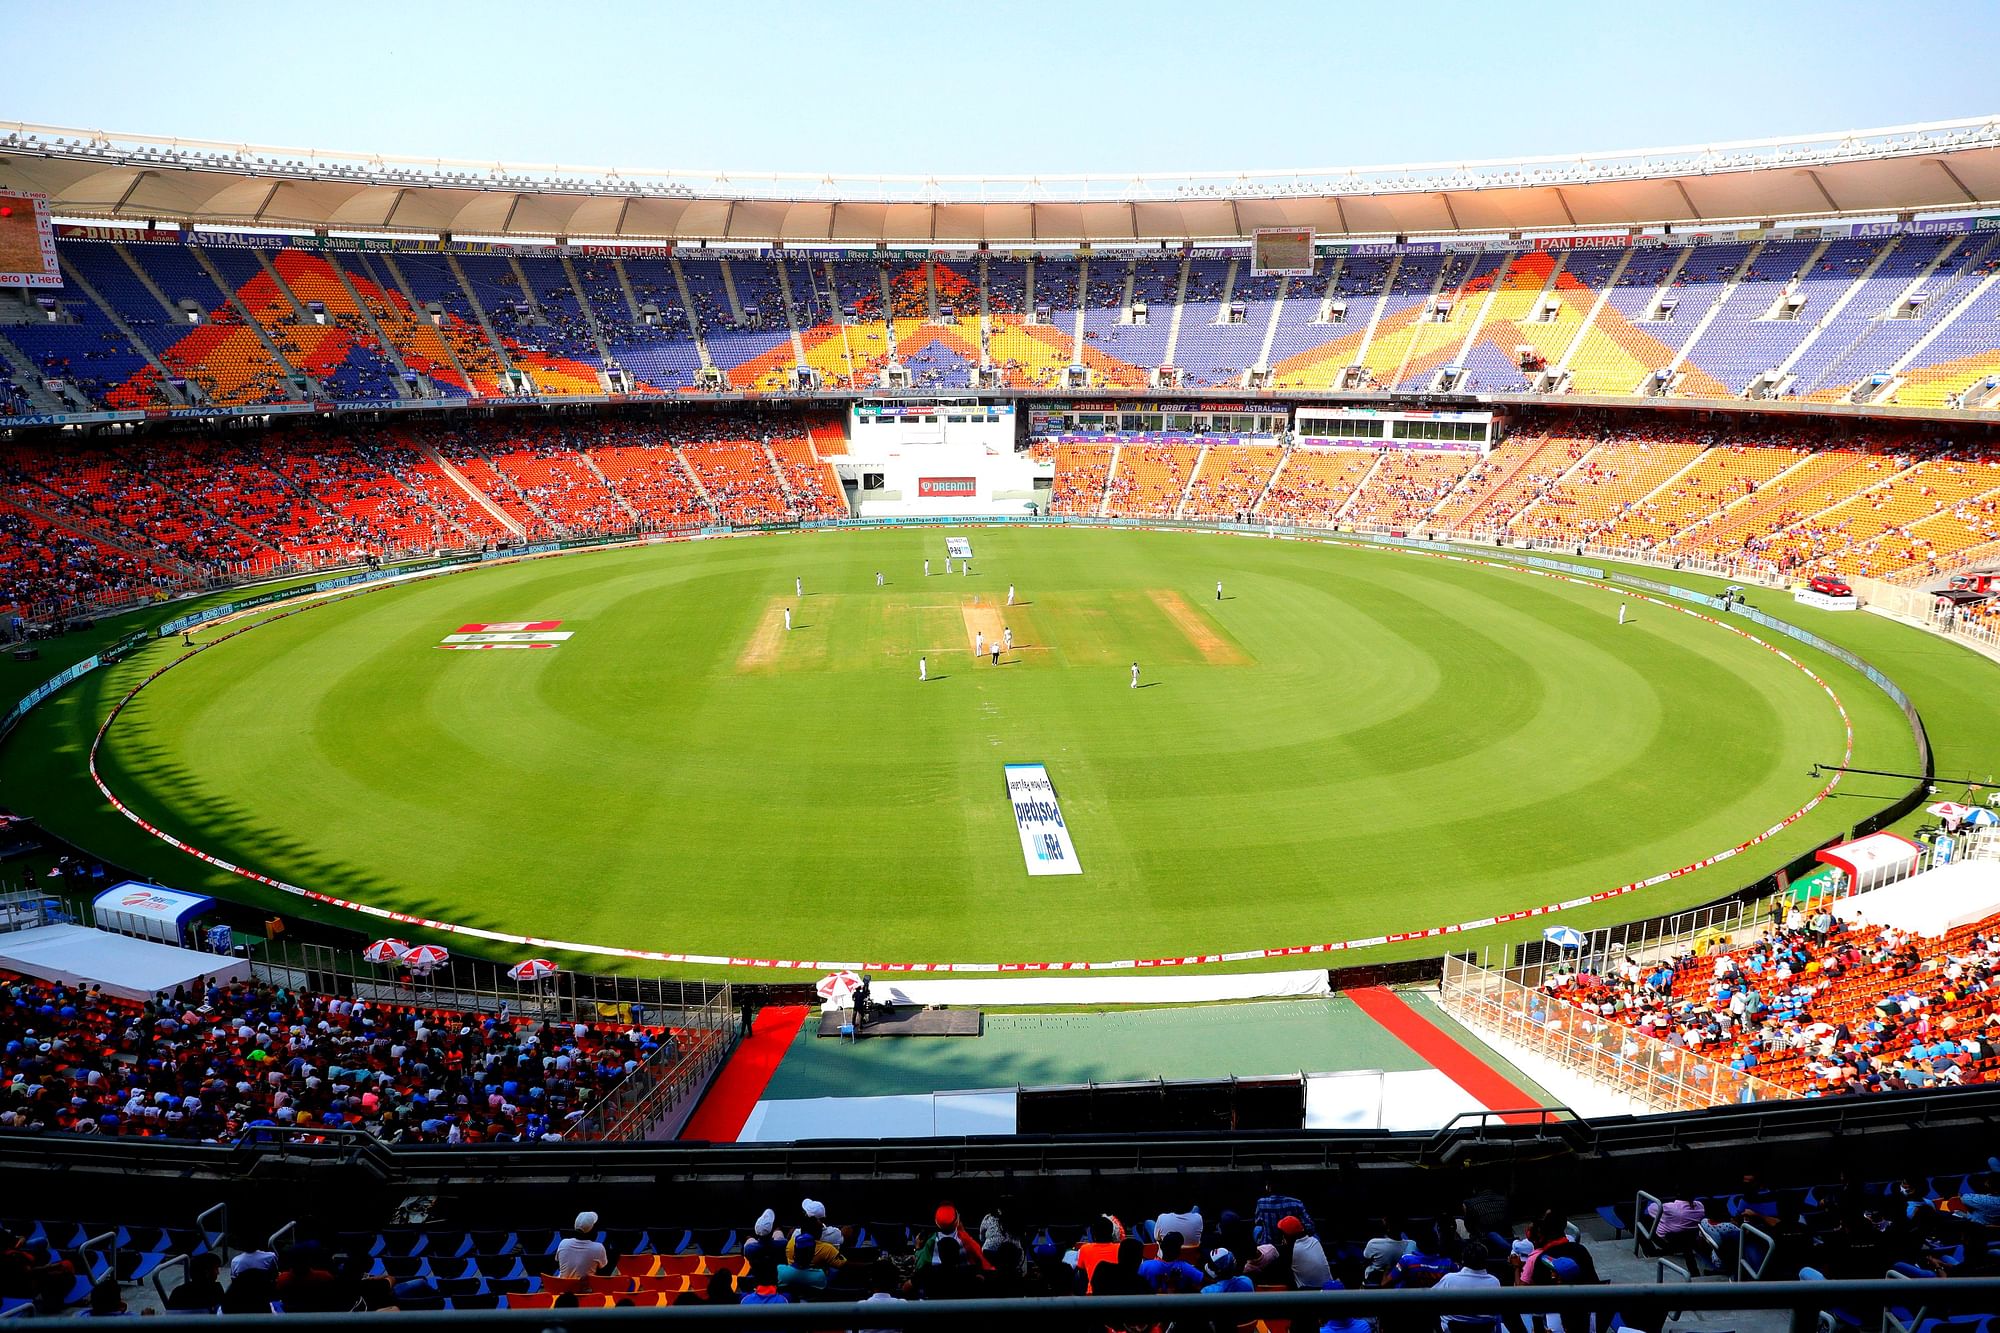 The cricket stadium at Motera has been renamed Narendra Modi Cricket Stadium.